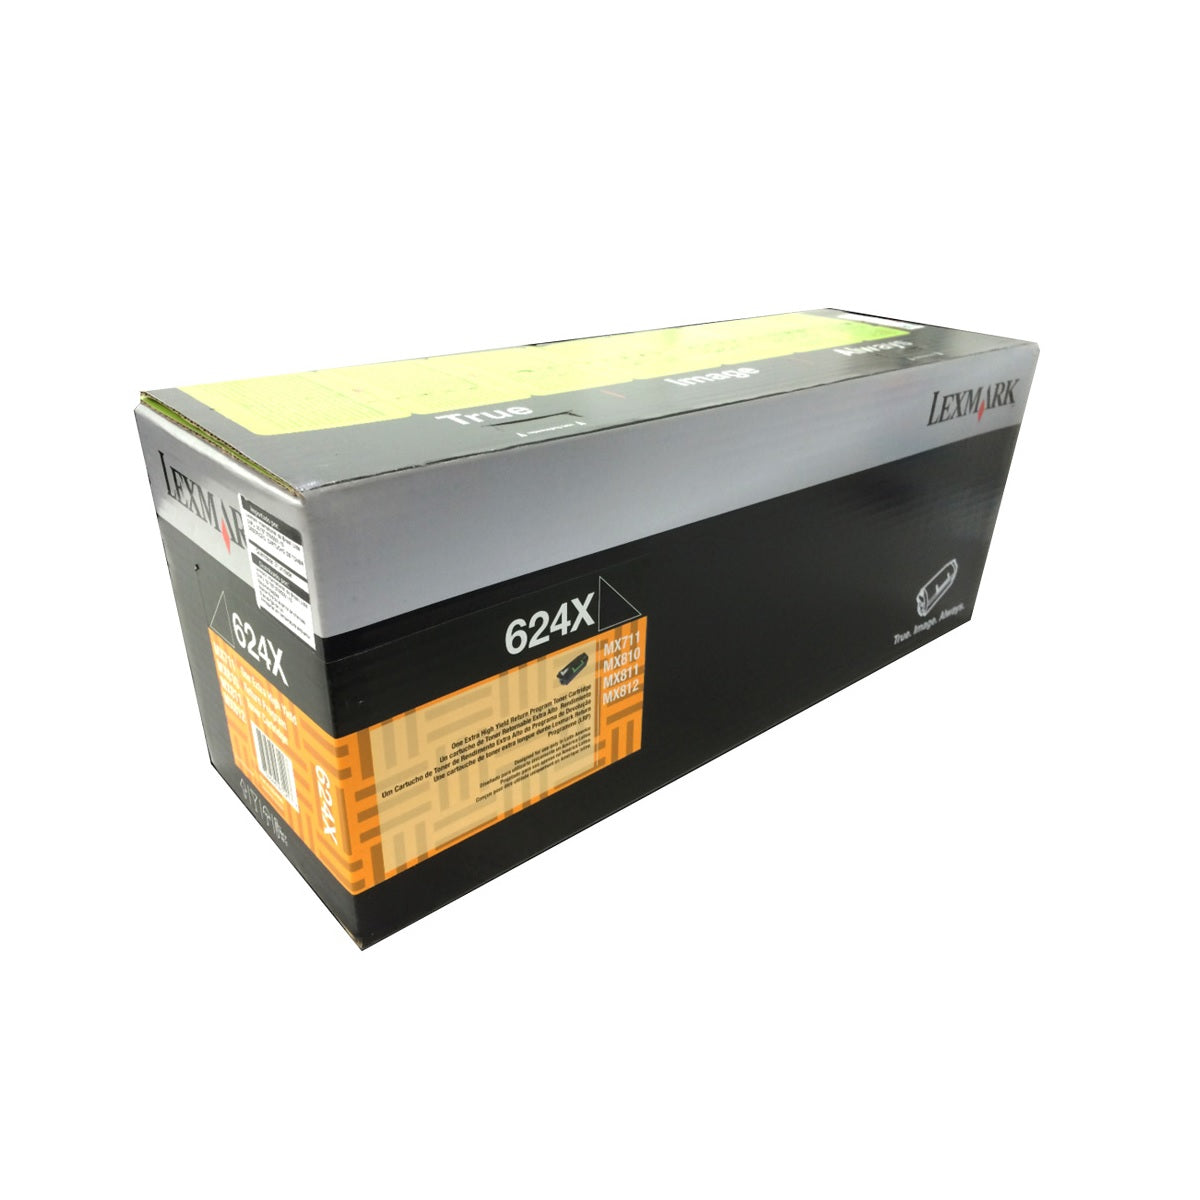 Toner Lexmark 624X (62D4X00) Negro (45K) - PERU DATA